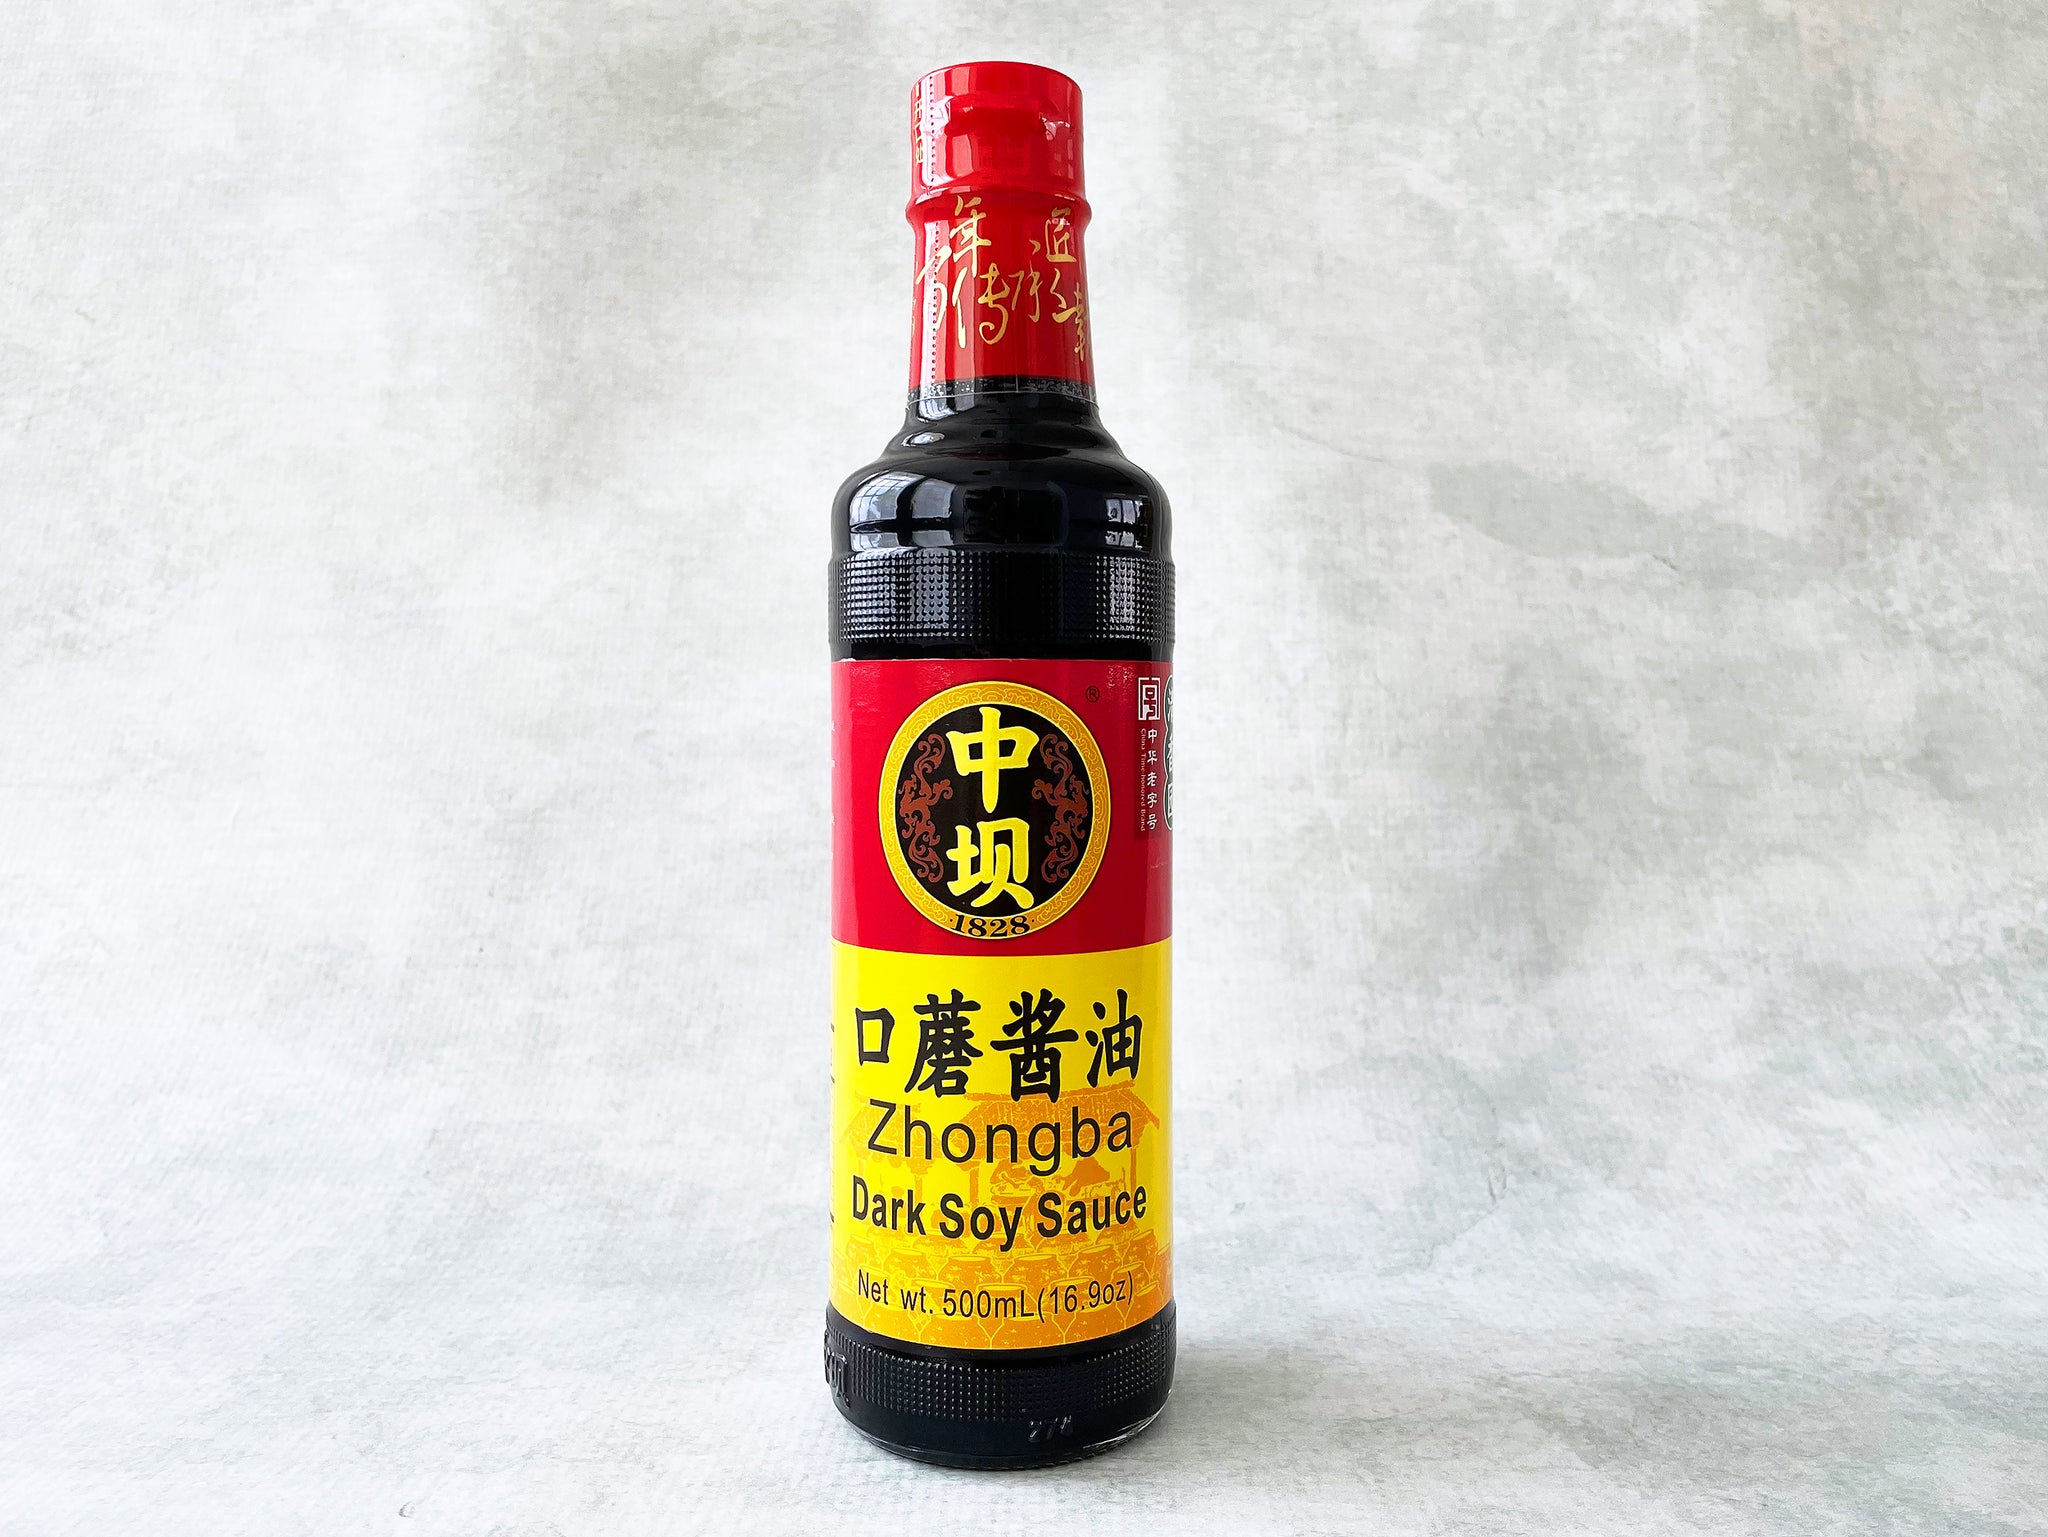 Zhongba Dark Soy Sauce (Naturally Brewed) - The Mala Market